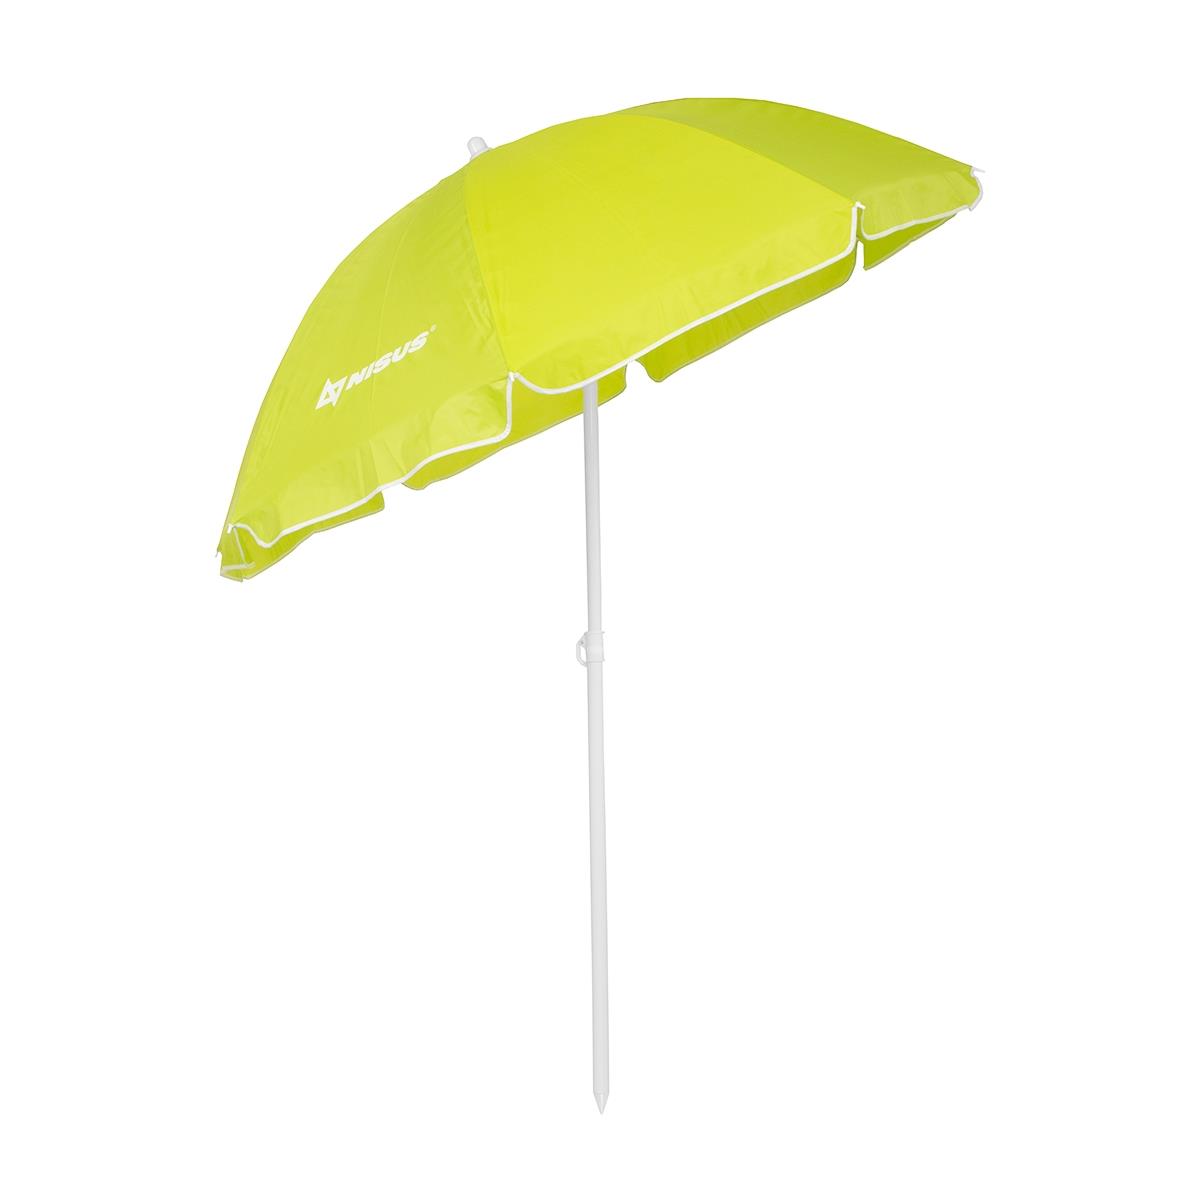 Зонт пляжный d 2,4м с наклоном  (28/32/210D) NA-240N-LG Nisus зонт пляжный d 2 00м с наклоном салатовый 28 32 210d na 200n lg nisus